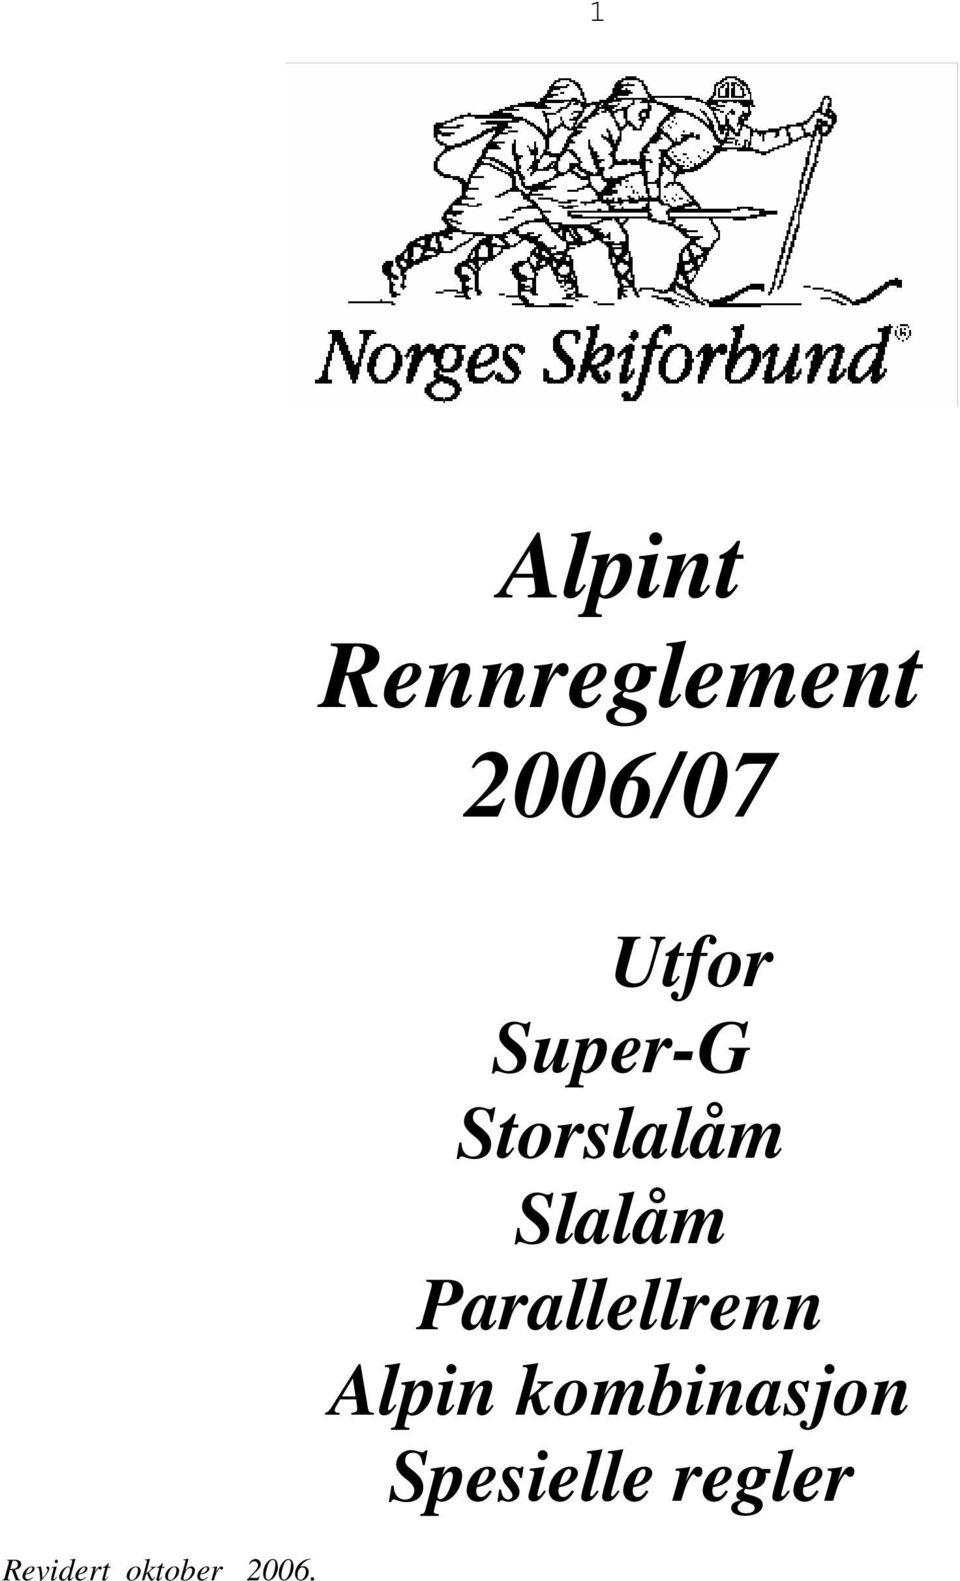 Utfor Super-G Storslalåm Slalåm